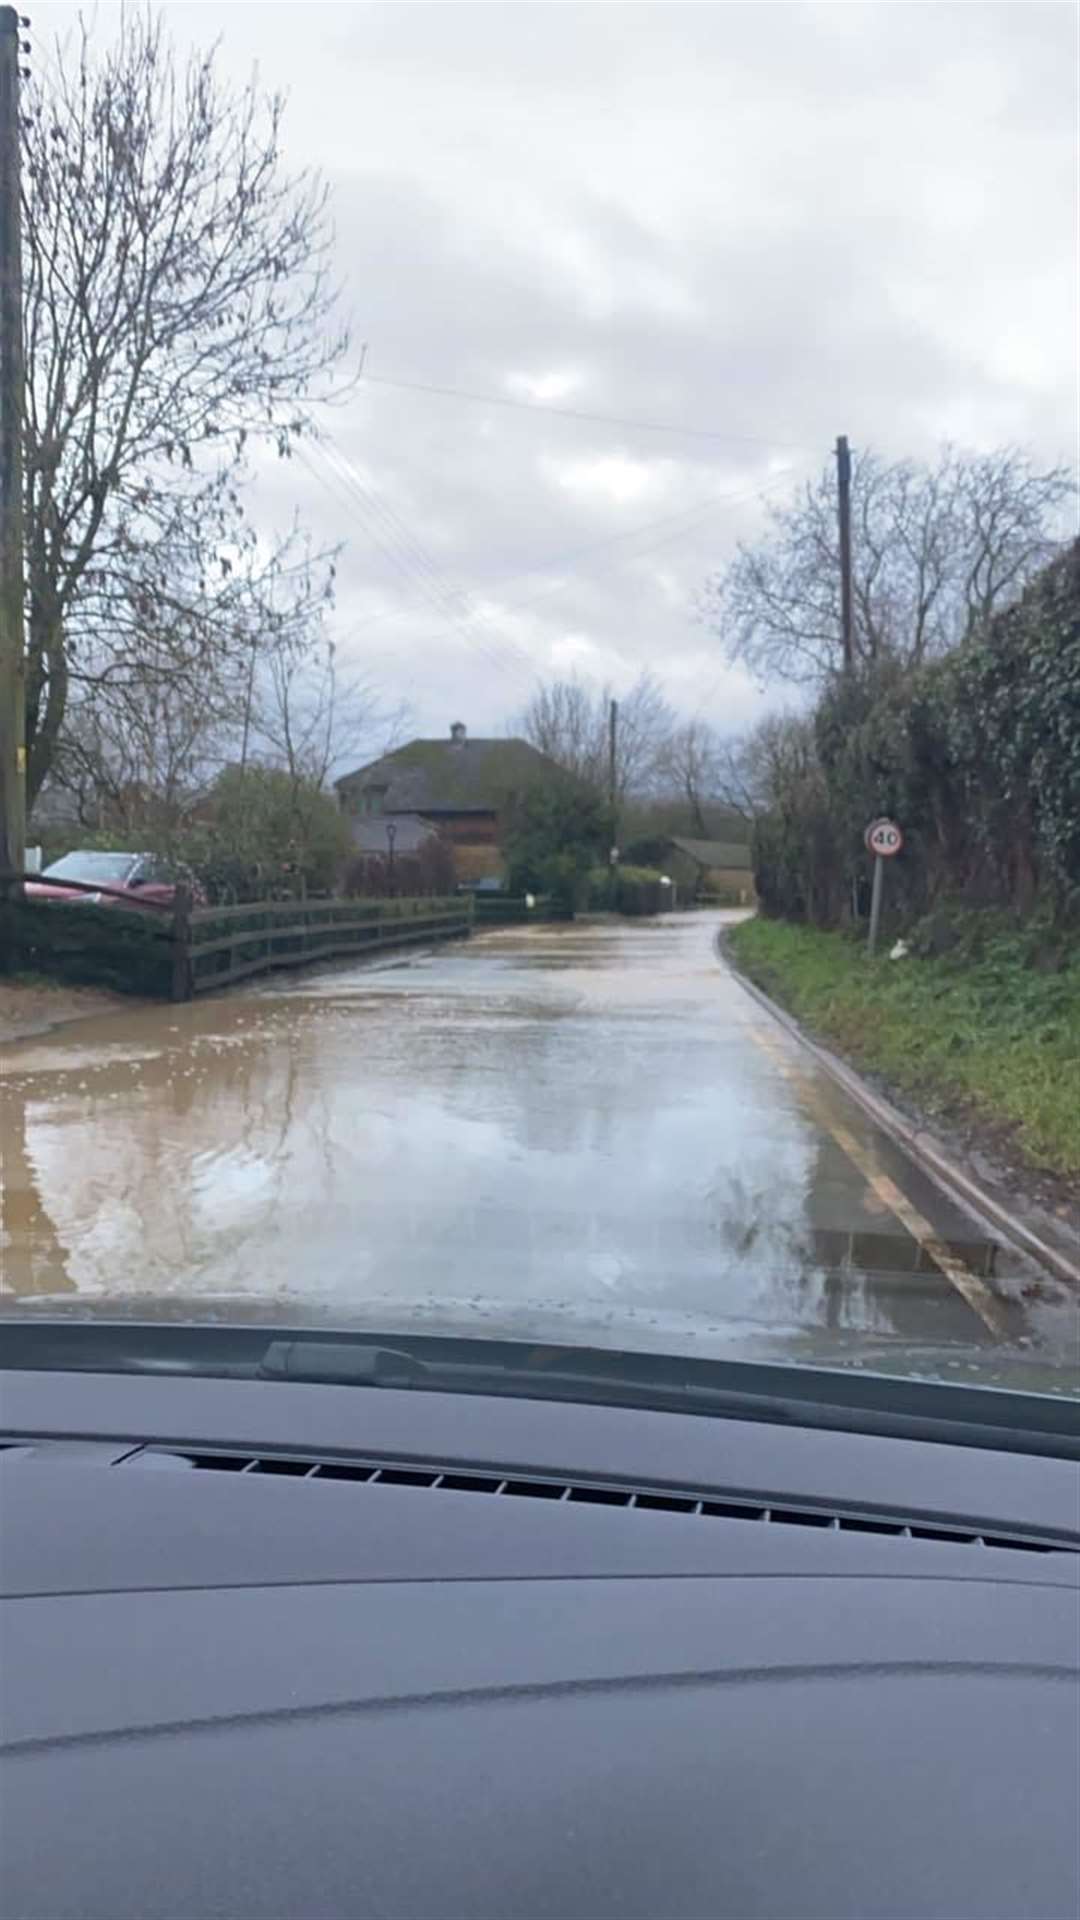 Flooding in Hunton near Maidstone Picture: James Lambert